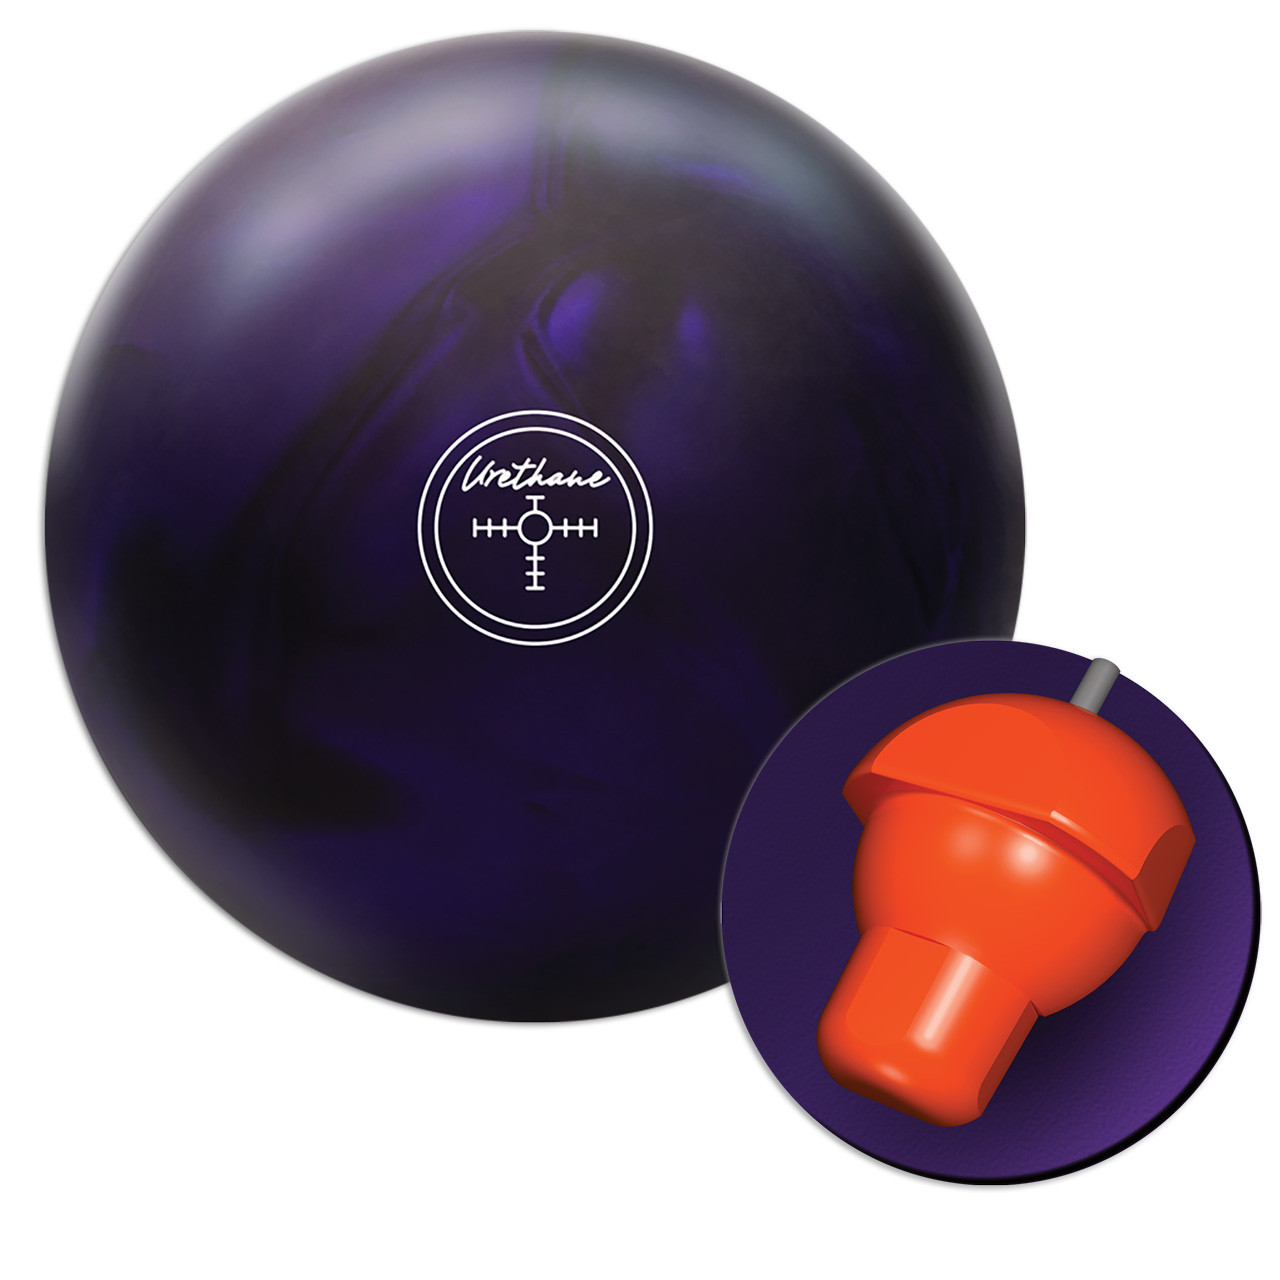 Bowling Products of Bowling Pins,Bowling Balls,Bowling shoes